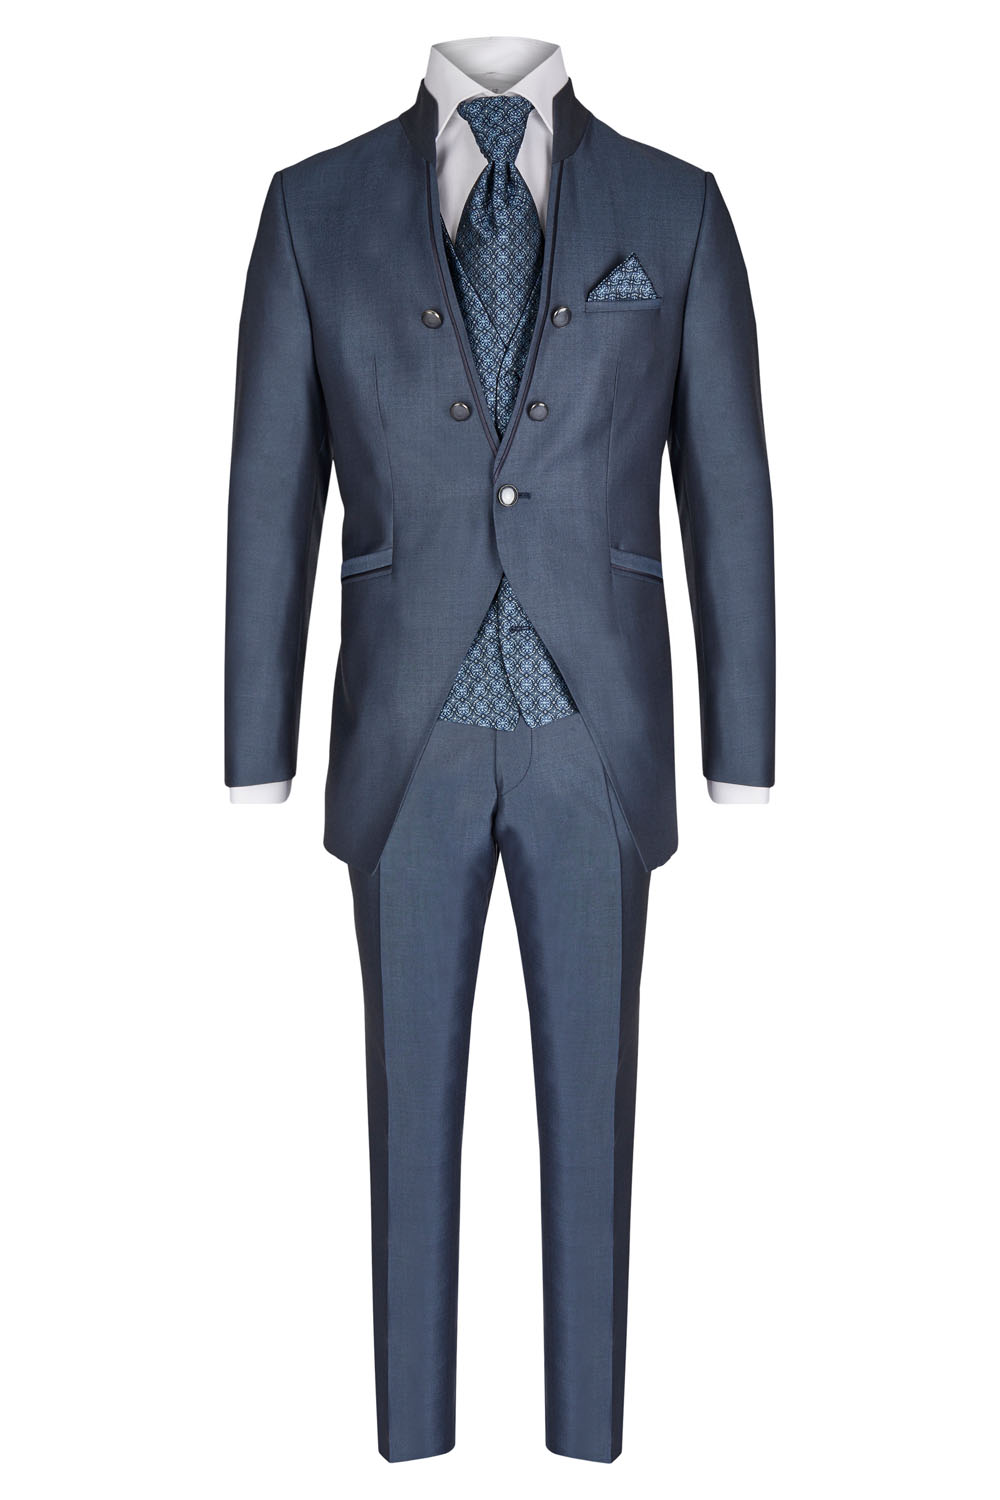 Smoke Blue 3 piece Wedding Suit - Tom Murphy's Formal and Menswear